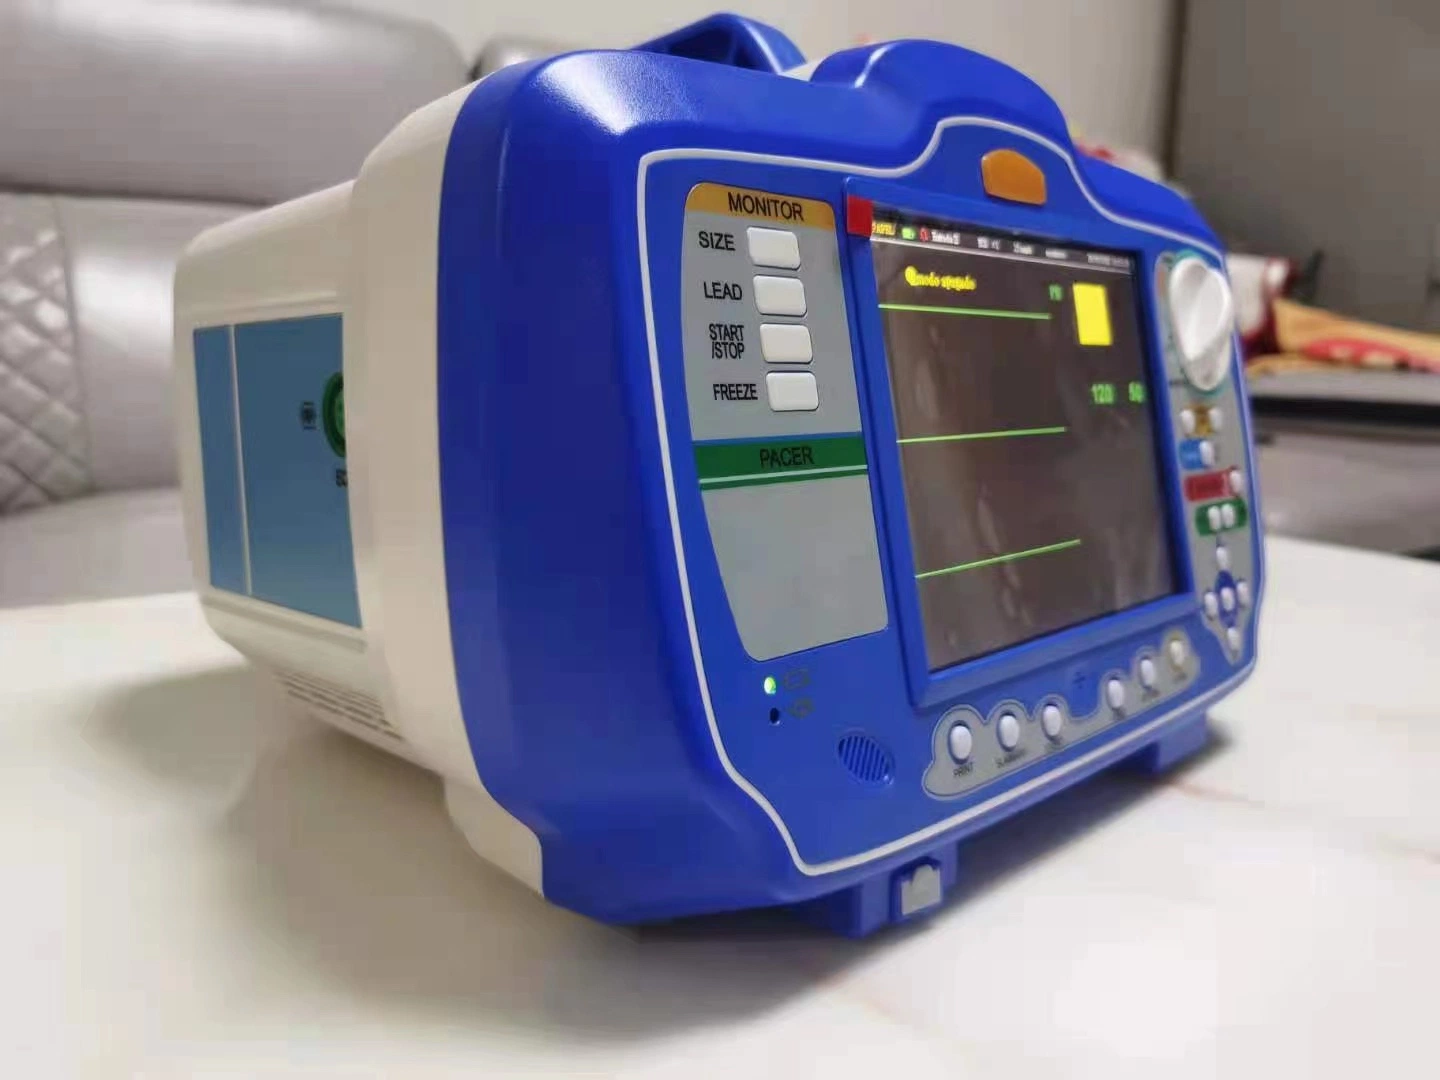 Mn-Def001 Portable Biphasic Defibrillator Automated External Defibrillation